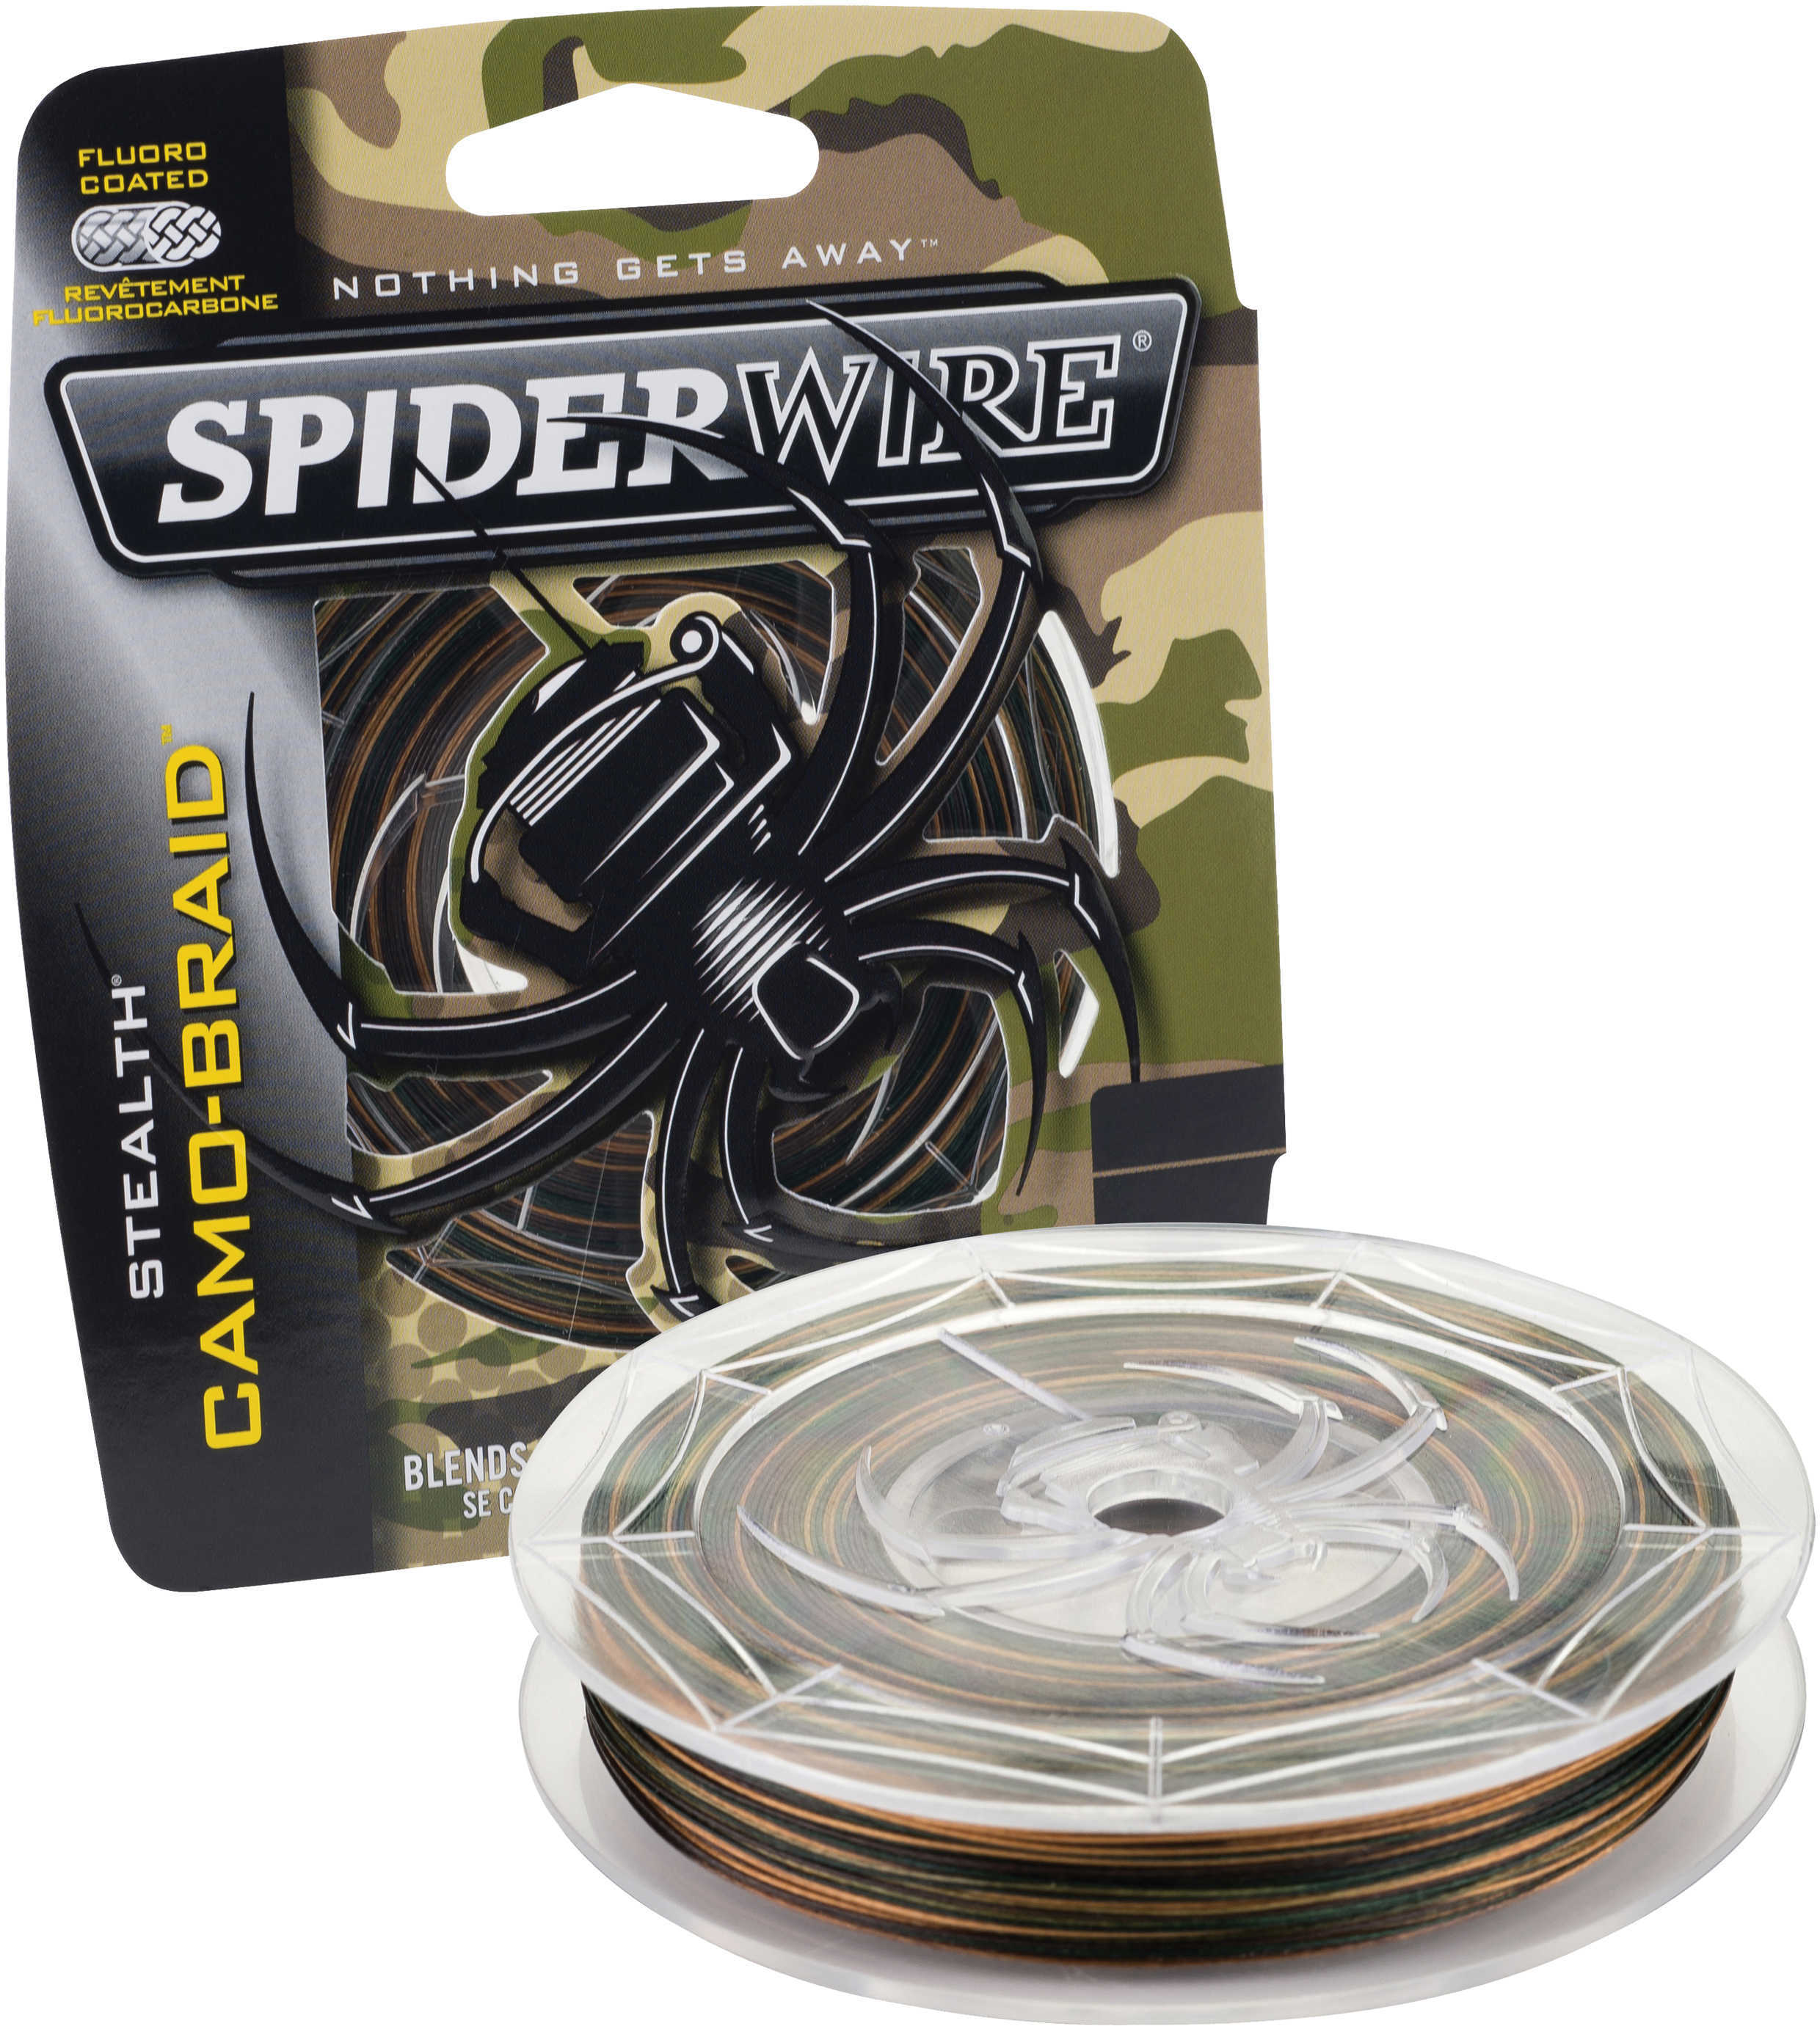 Spiderwire Stealth Braid, Camo 15 lb, 300 Yards Md: 1339794